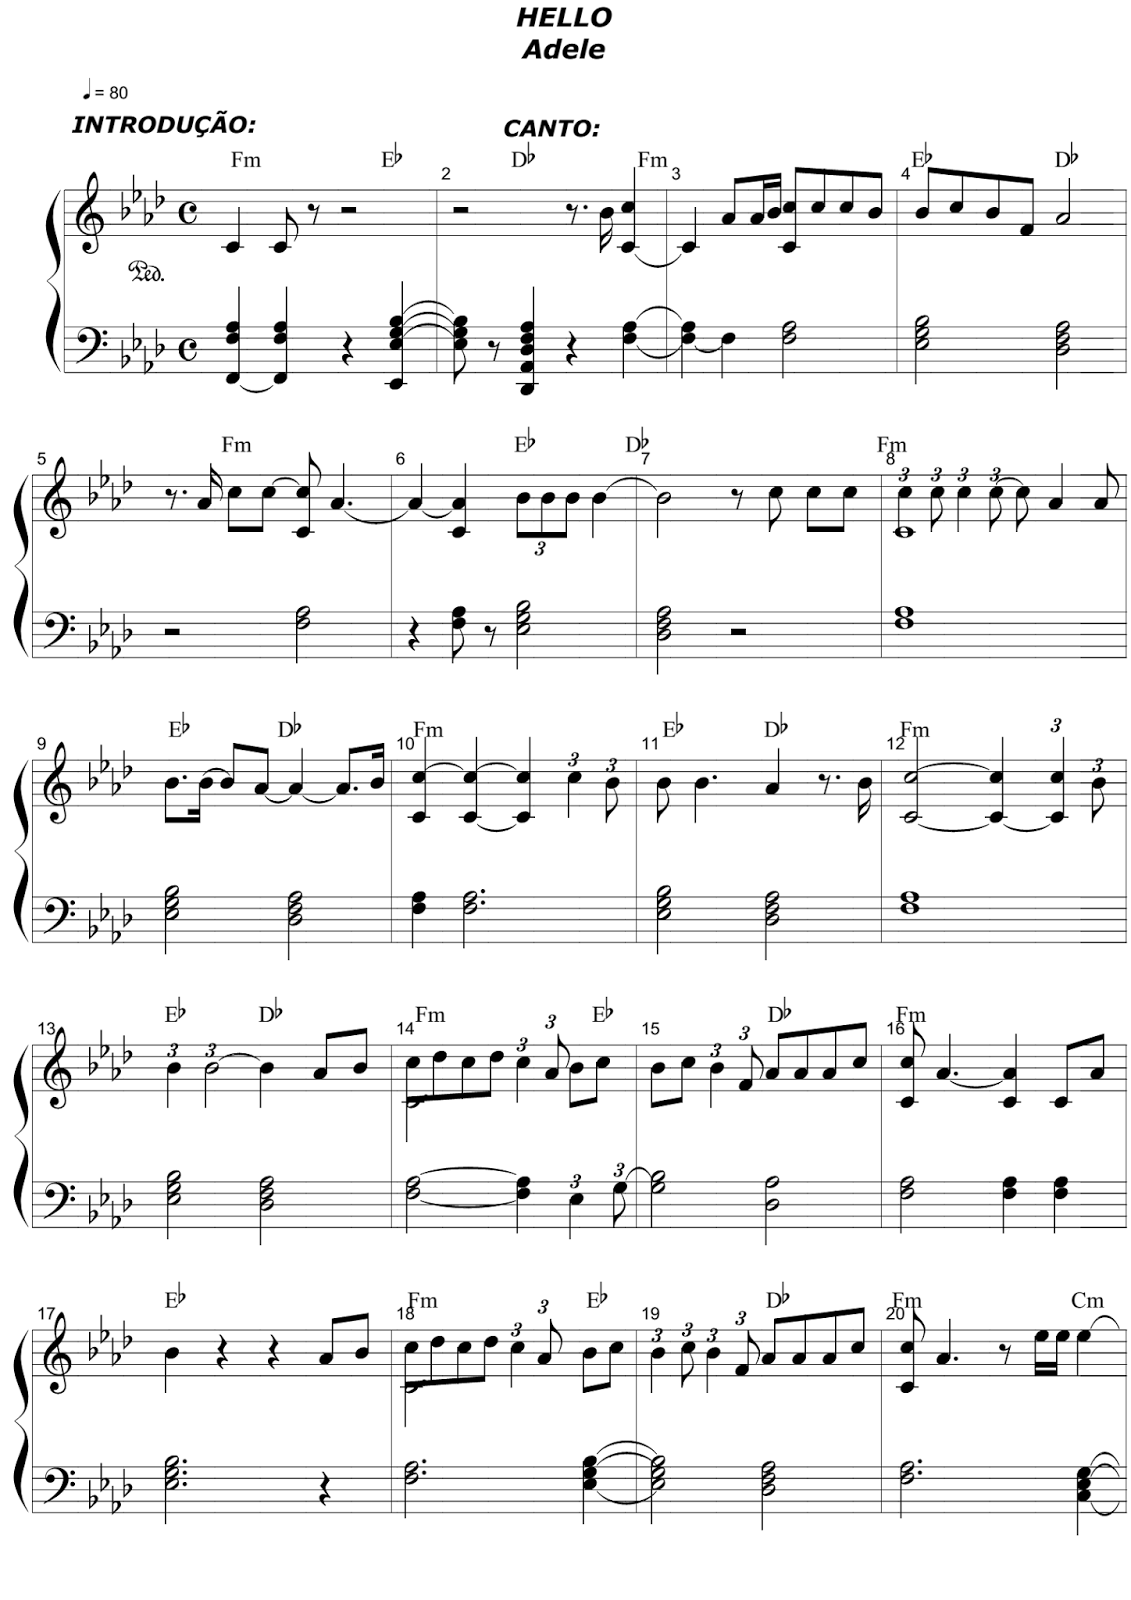 Partituras Musicais: Hello - Adele - Piano - (InÃ©dita) - n.Âº 1482